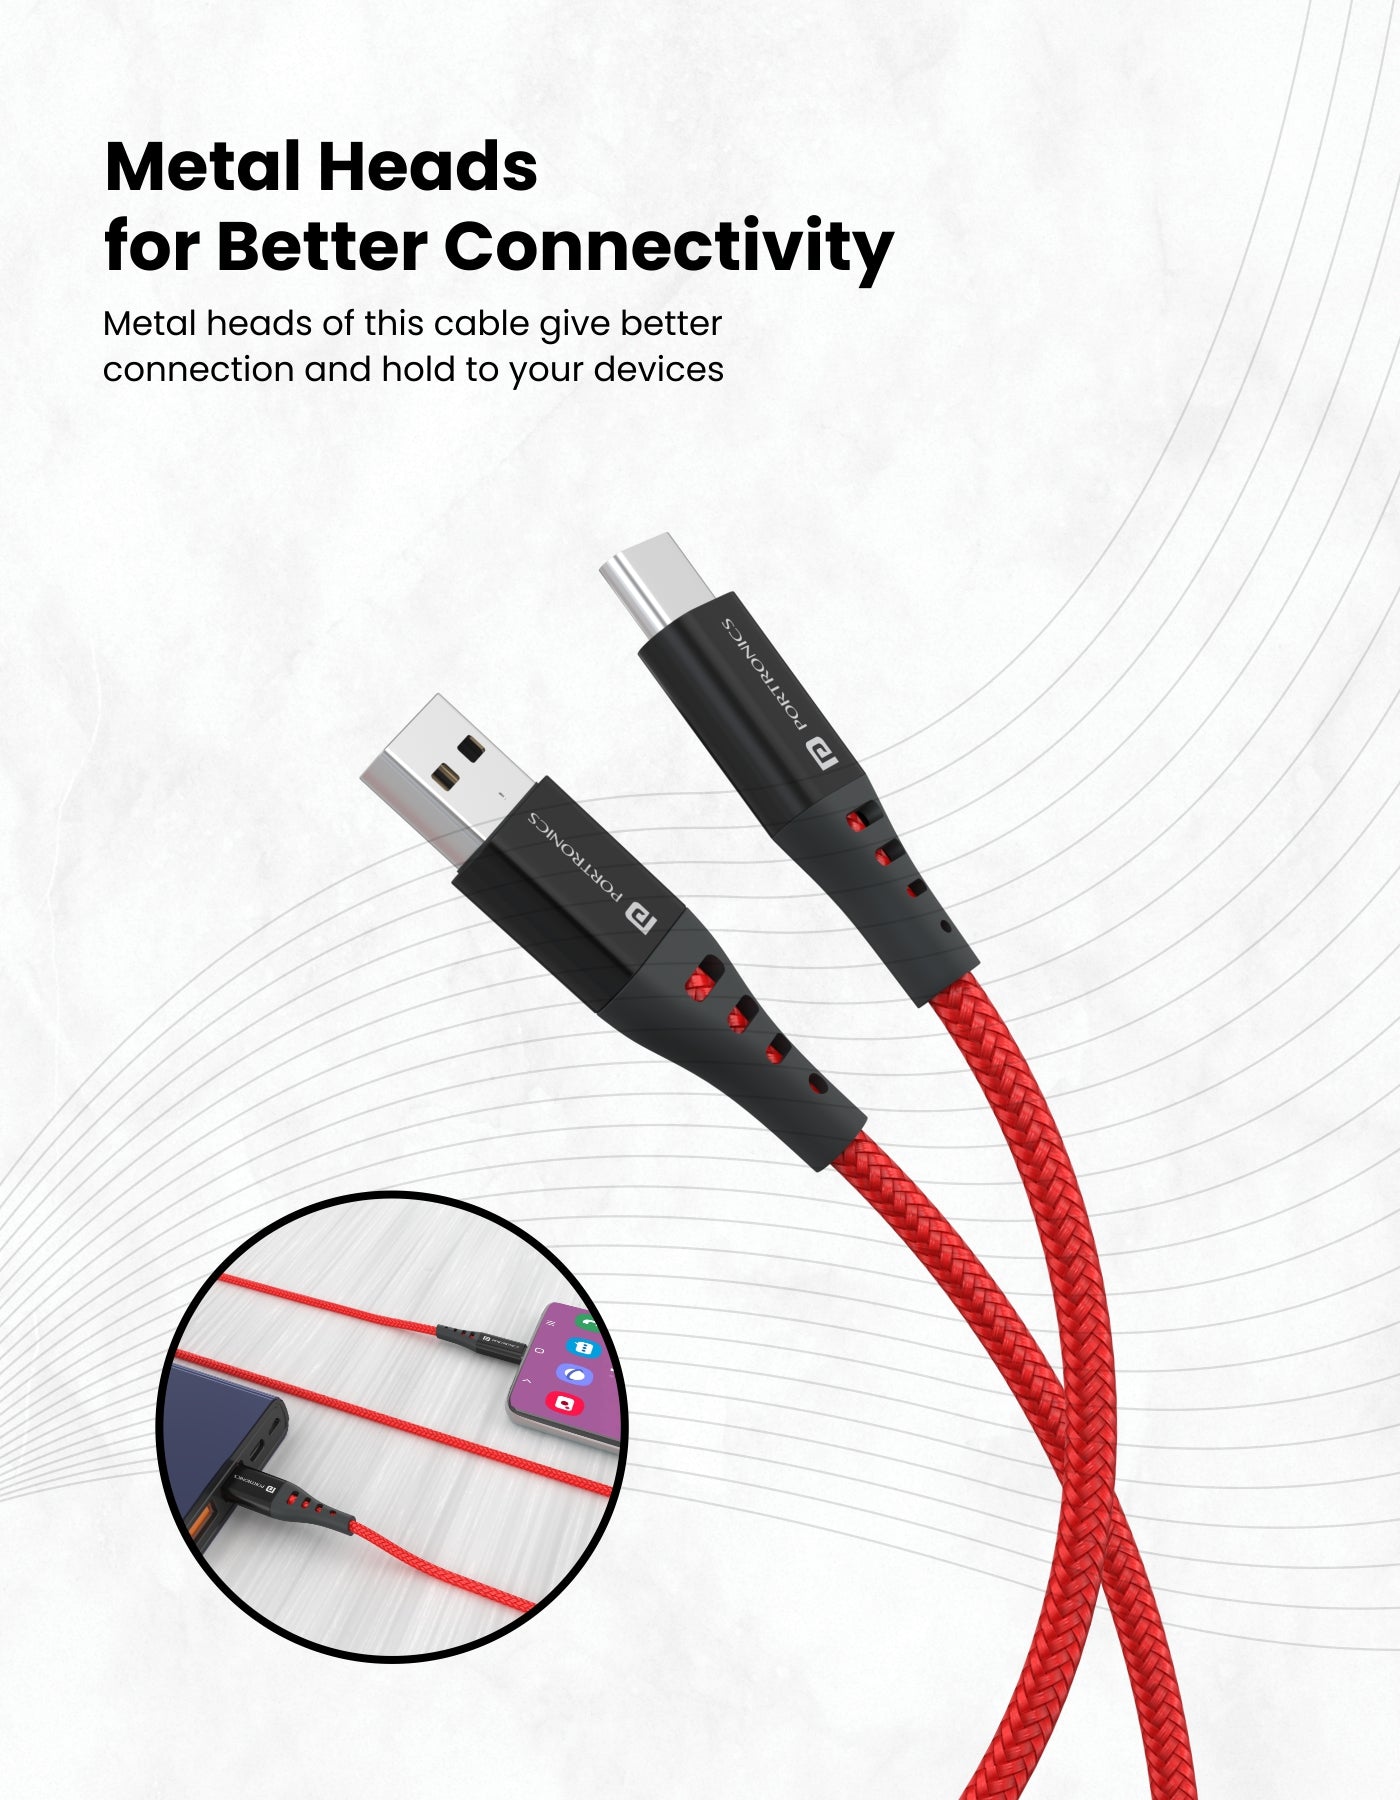 Portronics Konnect Dash 2 65w Super VOOC charging cable| type c charging cable| metal head type c fast charging cable